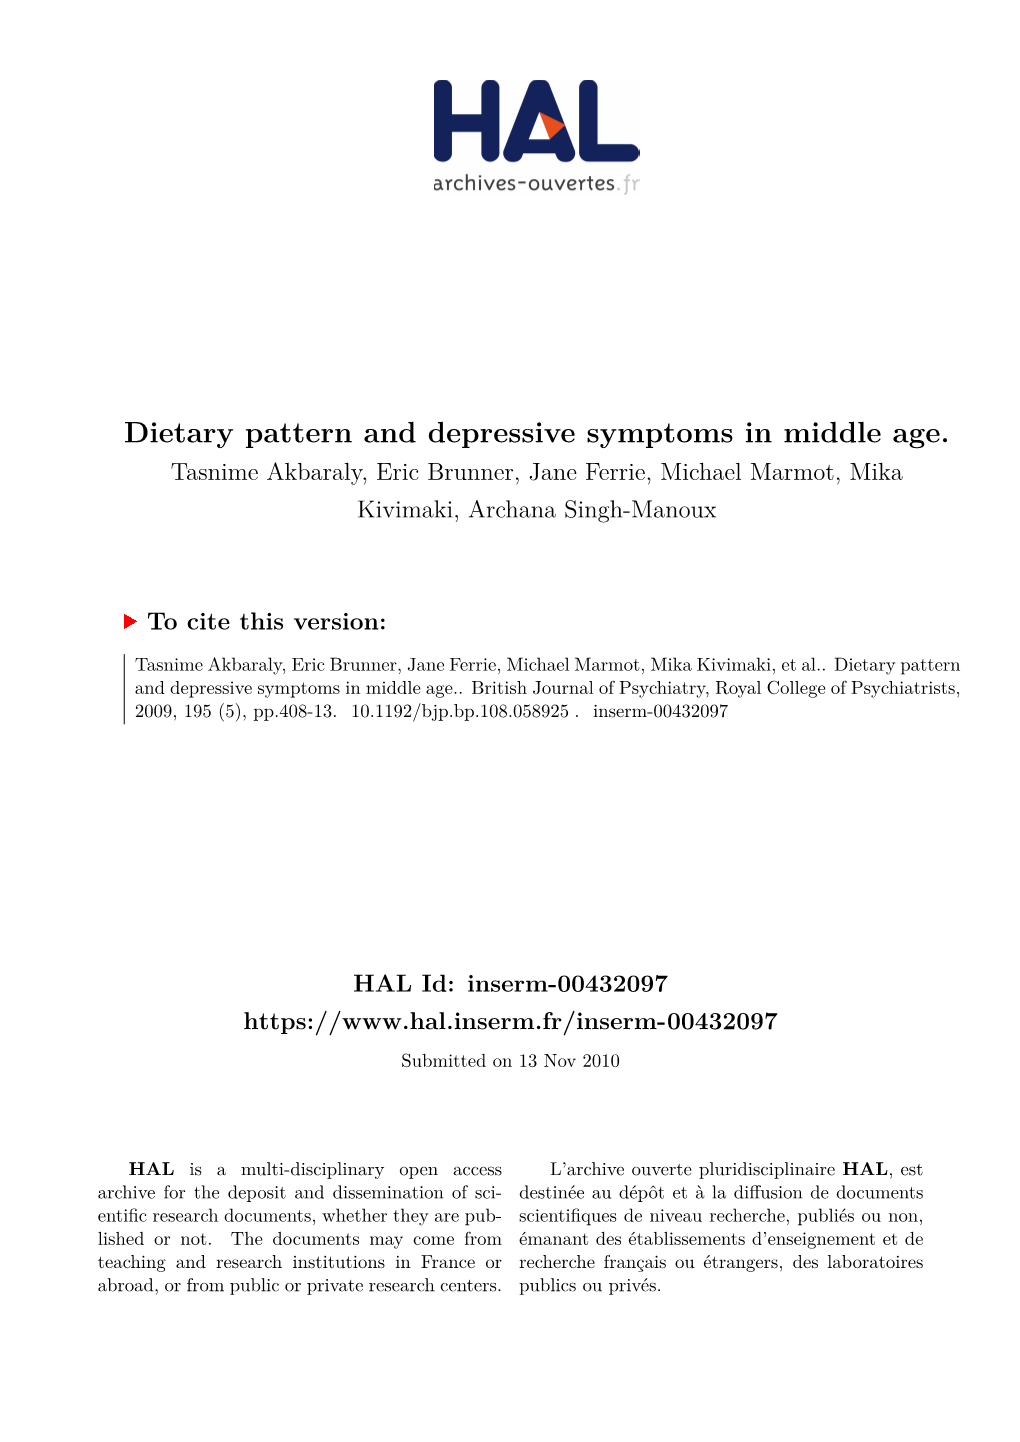 Dietary Pattern and Depressive Symptoms in Middle Age. Tasnime Akbaraly, Eric Brunner, Jane Ferrie, Michael Marmot, Mika Kivimaki, Archana Singh-Manoux